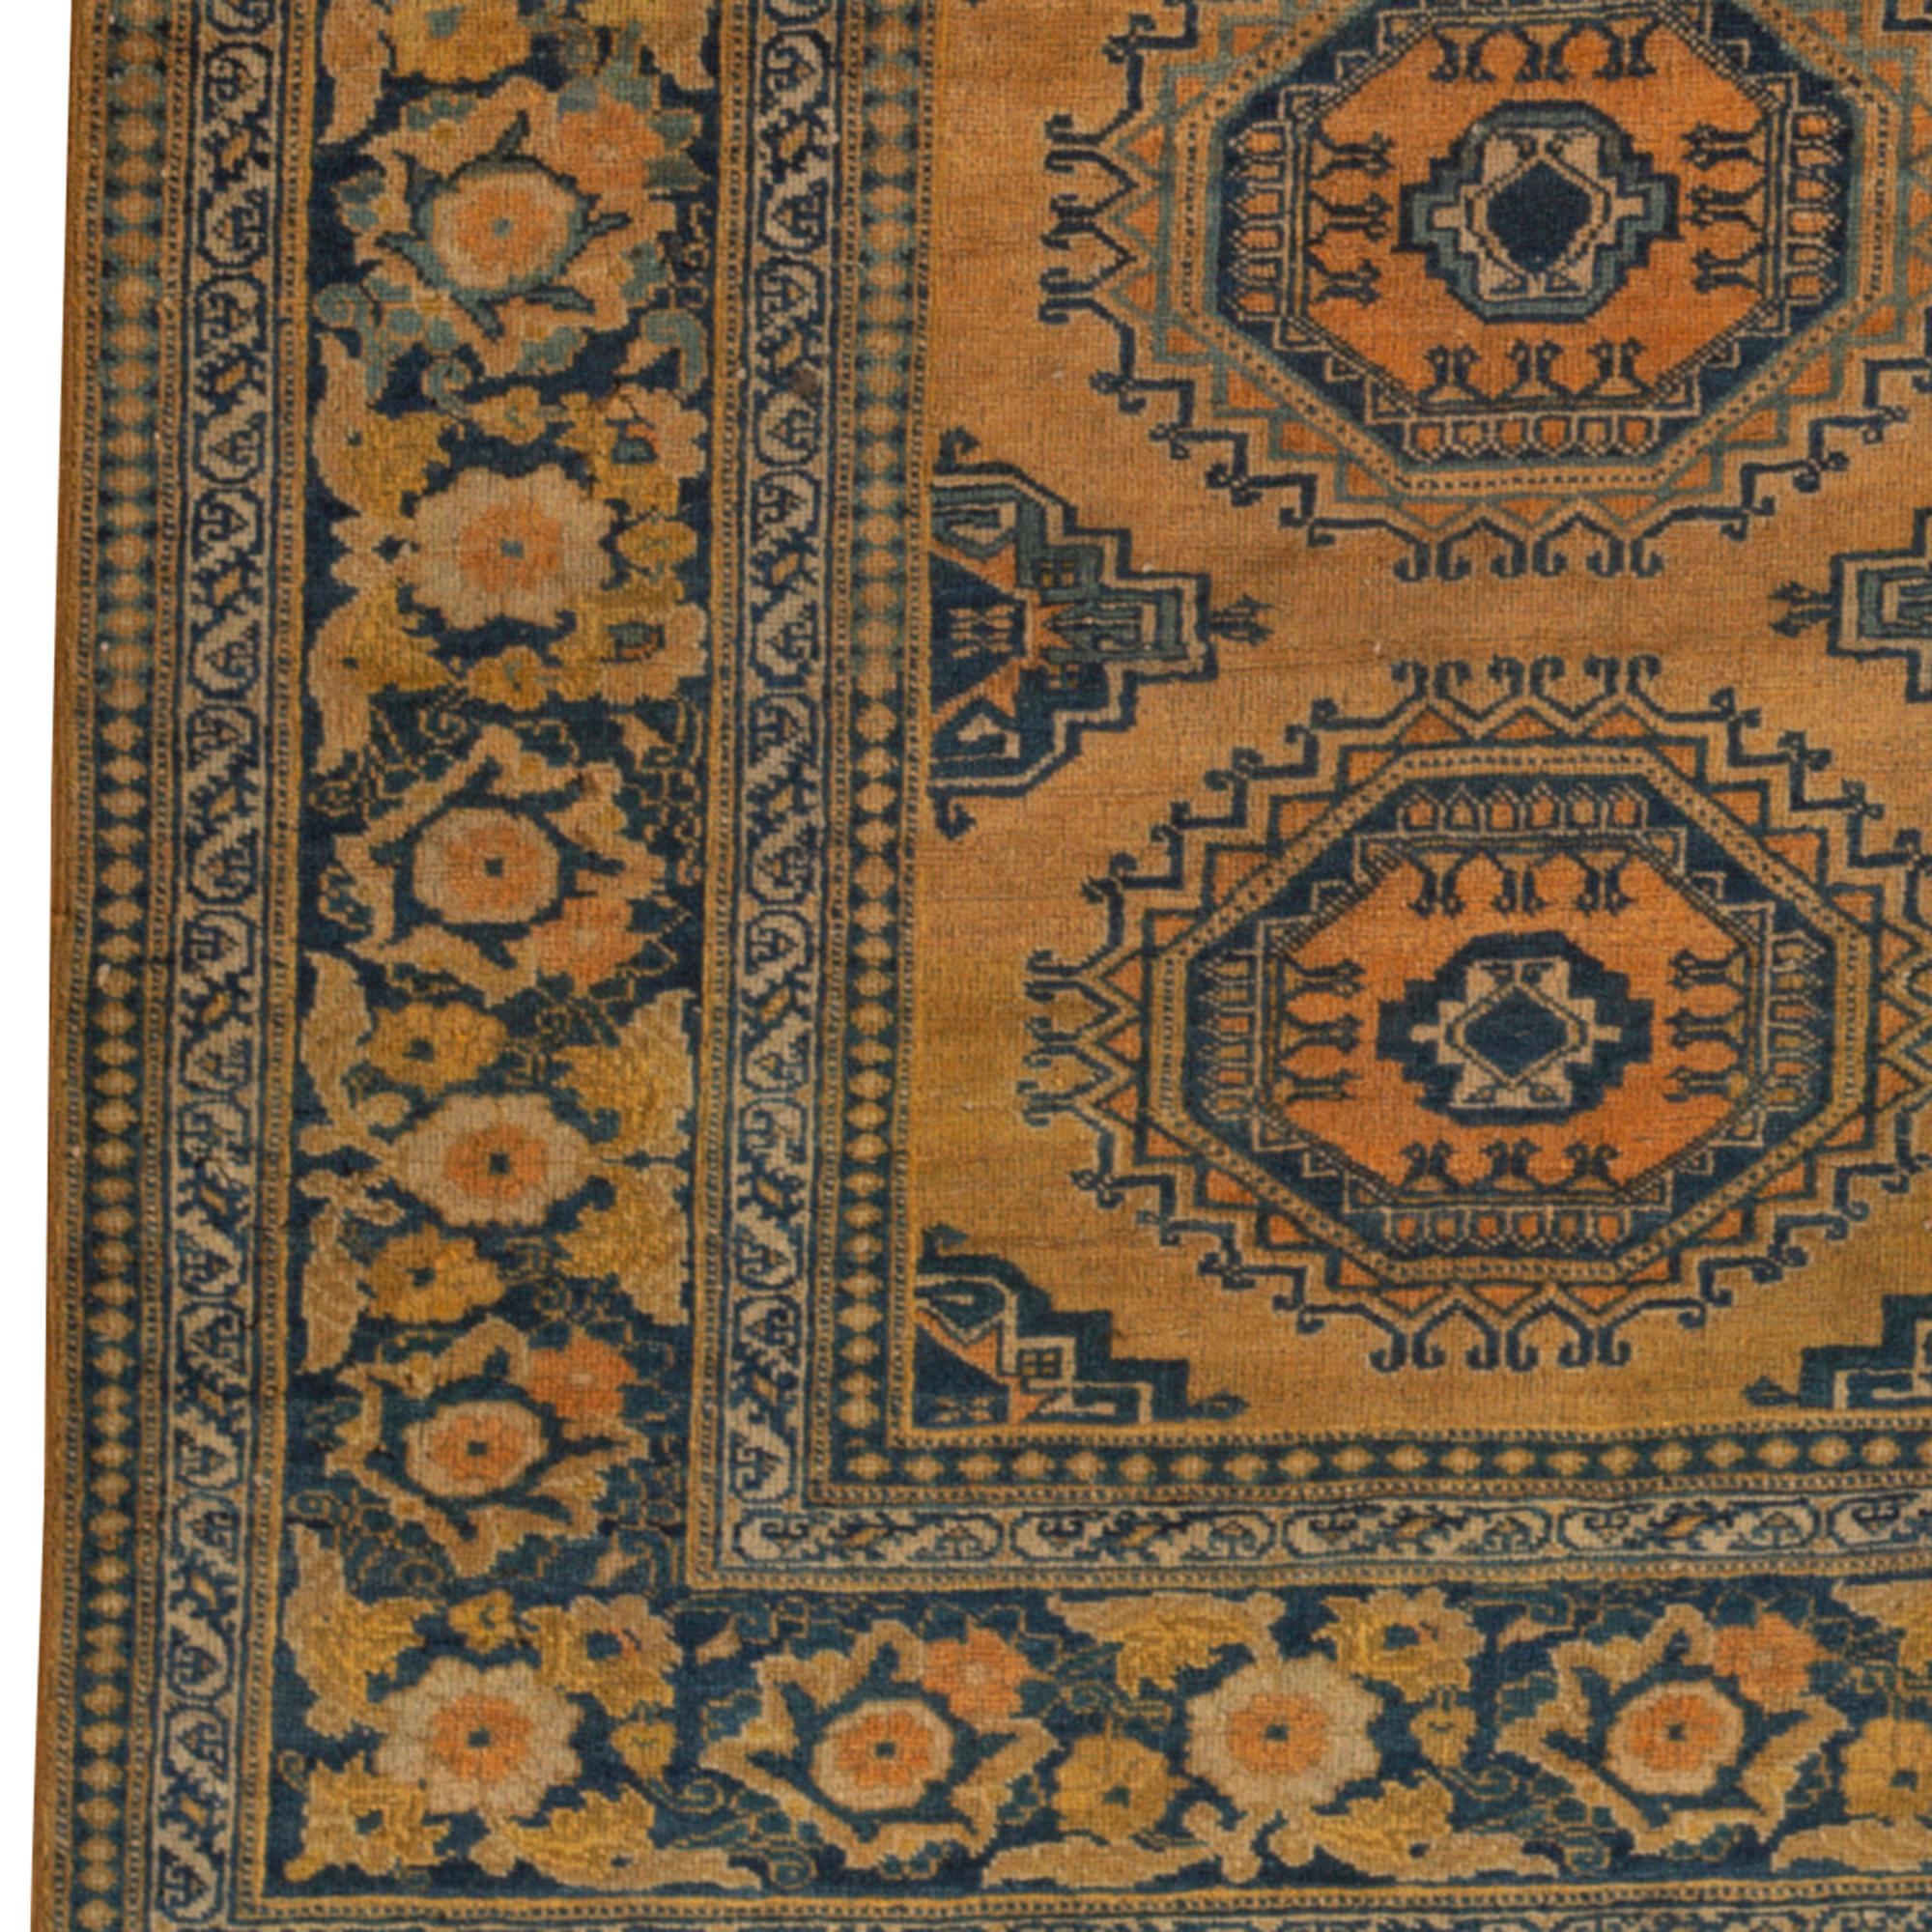 19th Century Traditional Handwoven Luxury Antique Persian Tabriz, circa 1890 Area Rug For Sale